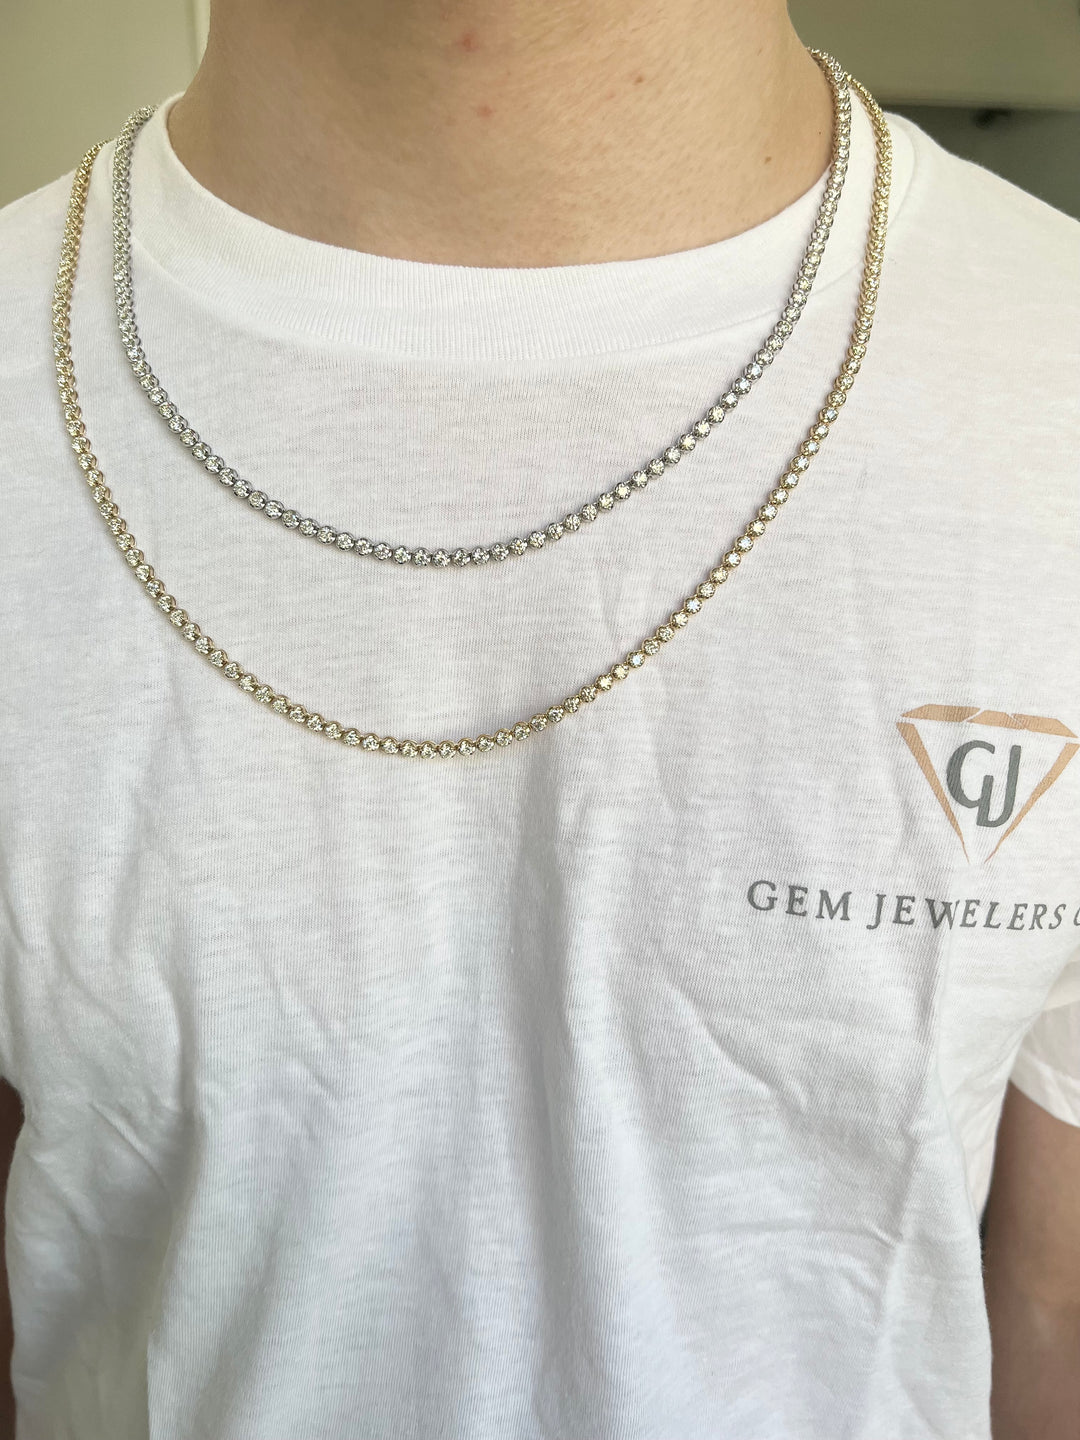 Meyul - 15 Carat Men's Natural Diamond Tennis Necklace Chain